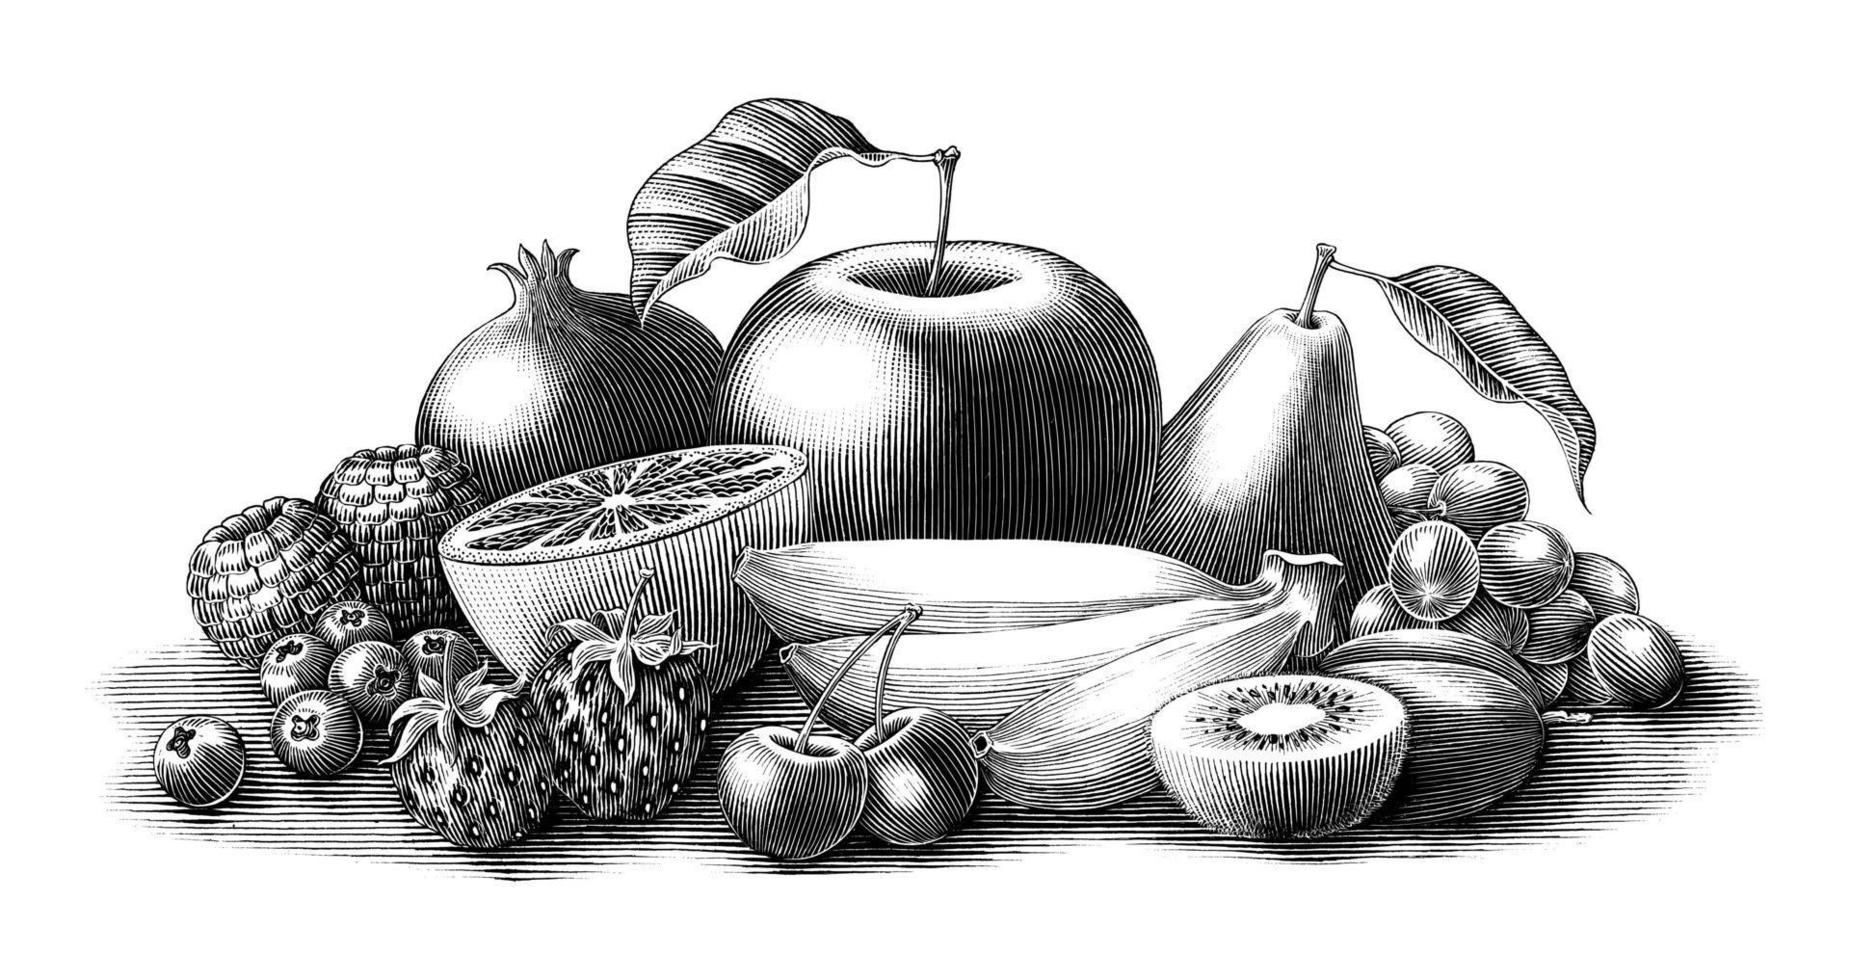 frukt illustration vintage gravyr stil svartvitt klipp isolerad på vit bakgrund vektor